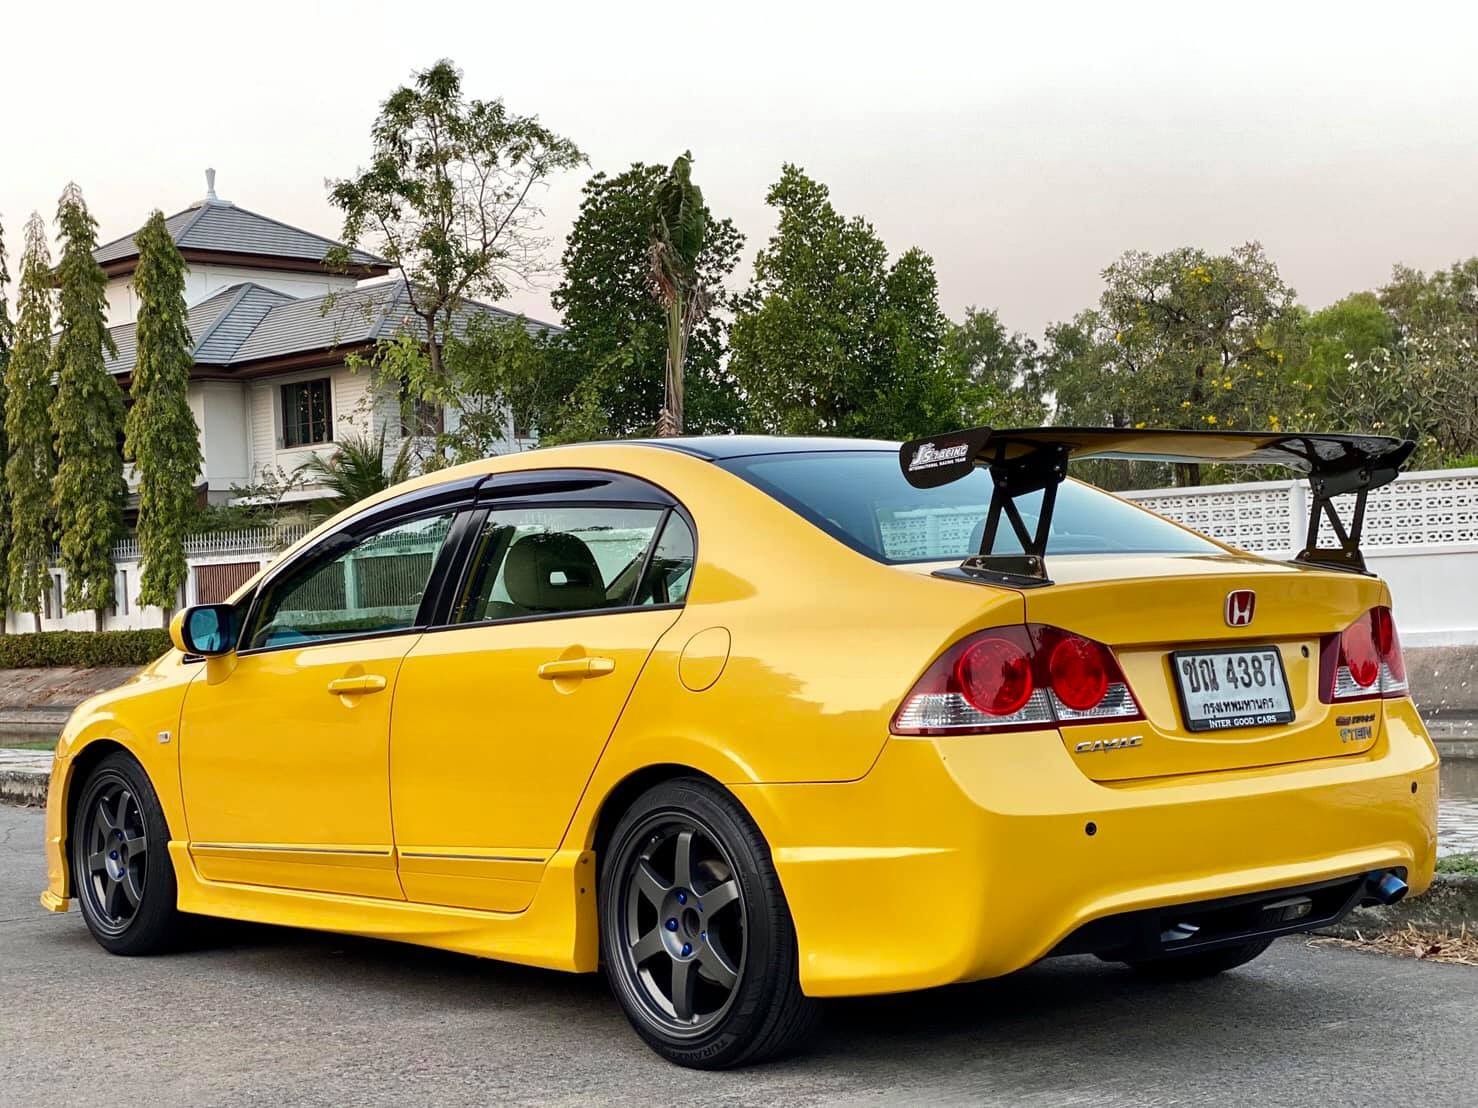 Honda Civic FD ปี 2007 สีเหลือง